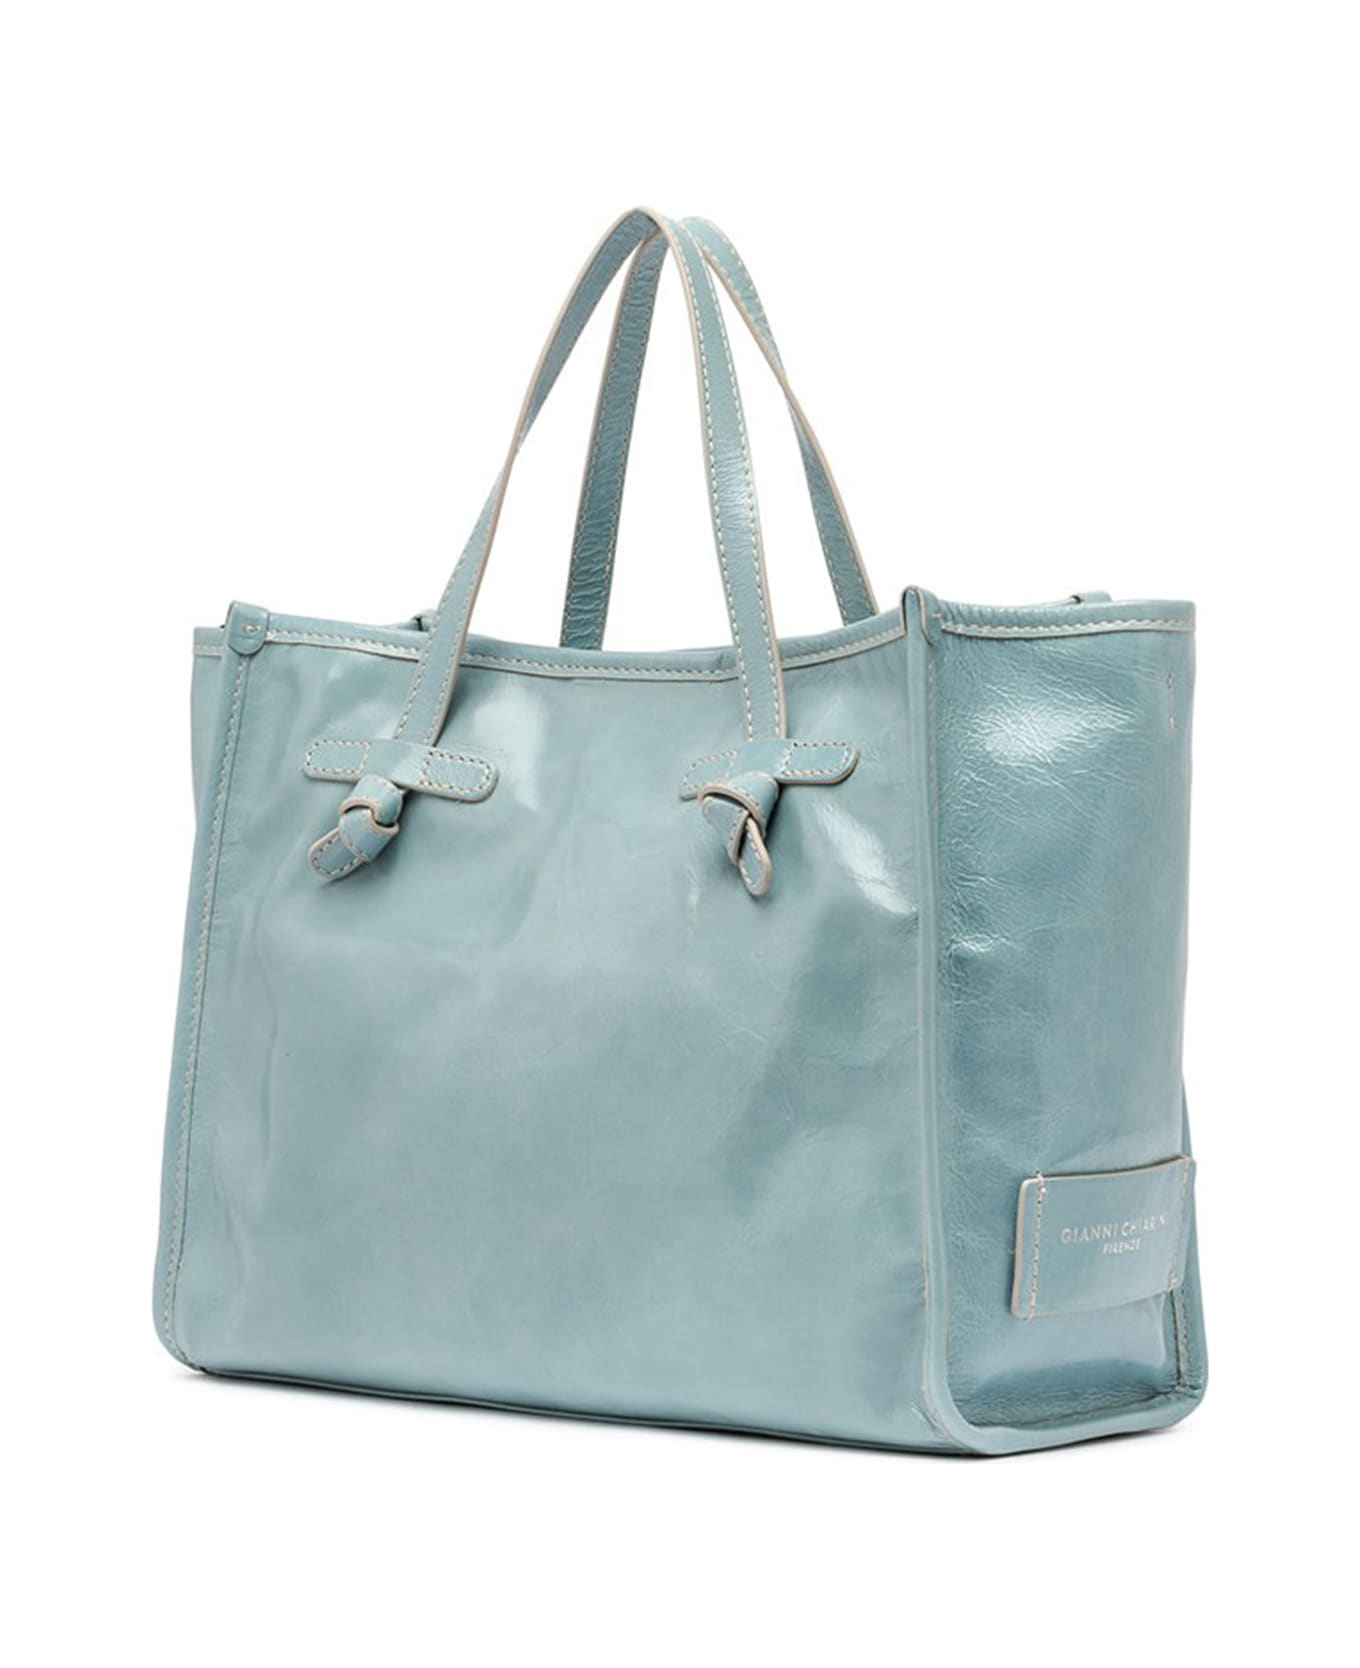 Gianni Chiarini Marcella Shopping Bag In Translucent Leather - AZUR トートバッグ